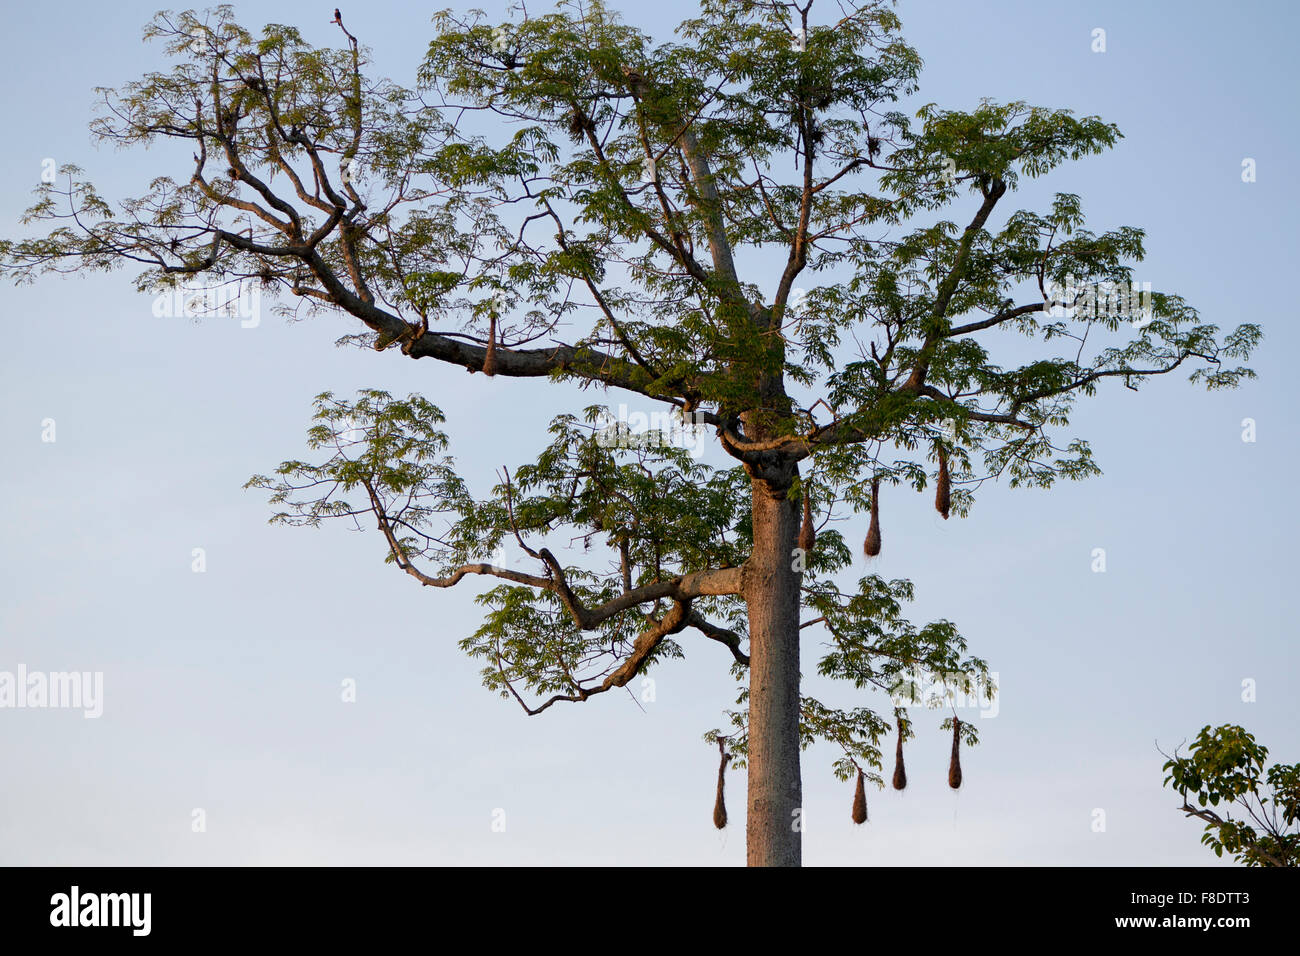 Dozen nests hanging on tall tropical tree, Venezuela Stock Photo